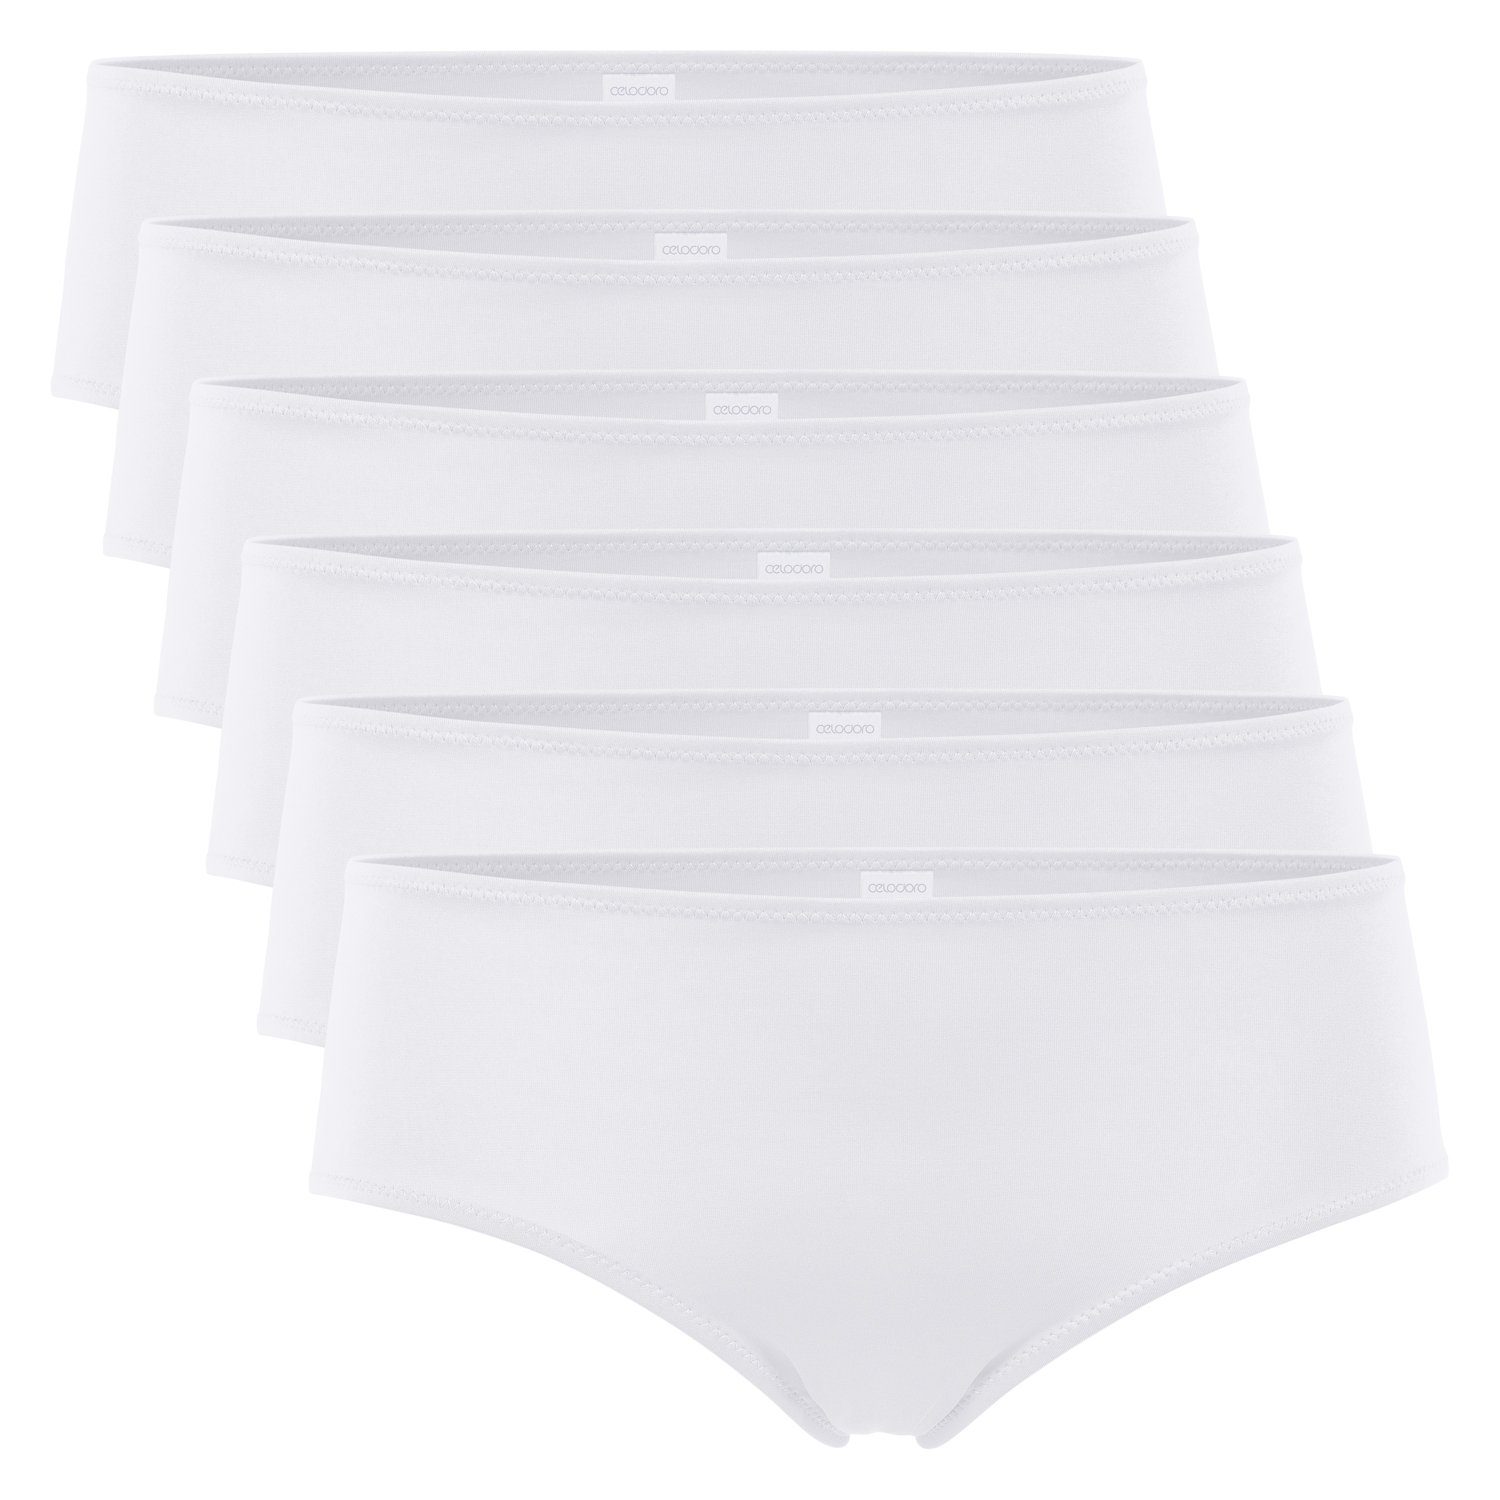 Panty Pack) Dry-Fasern celodoro Quick Hipster Panties Panty Weiss aus (6er Damen